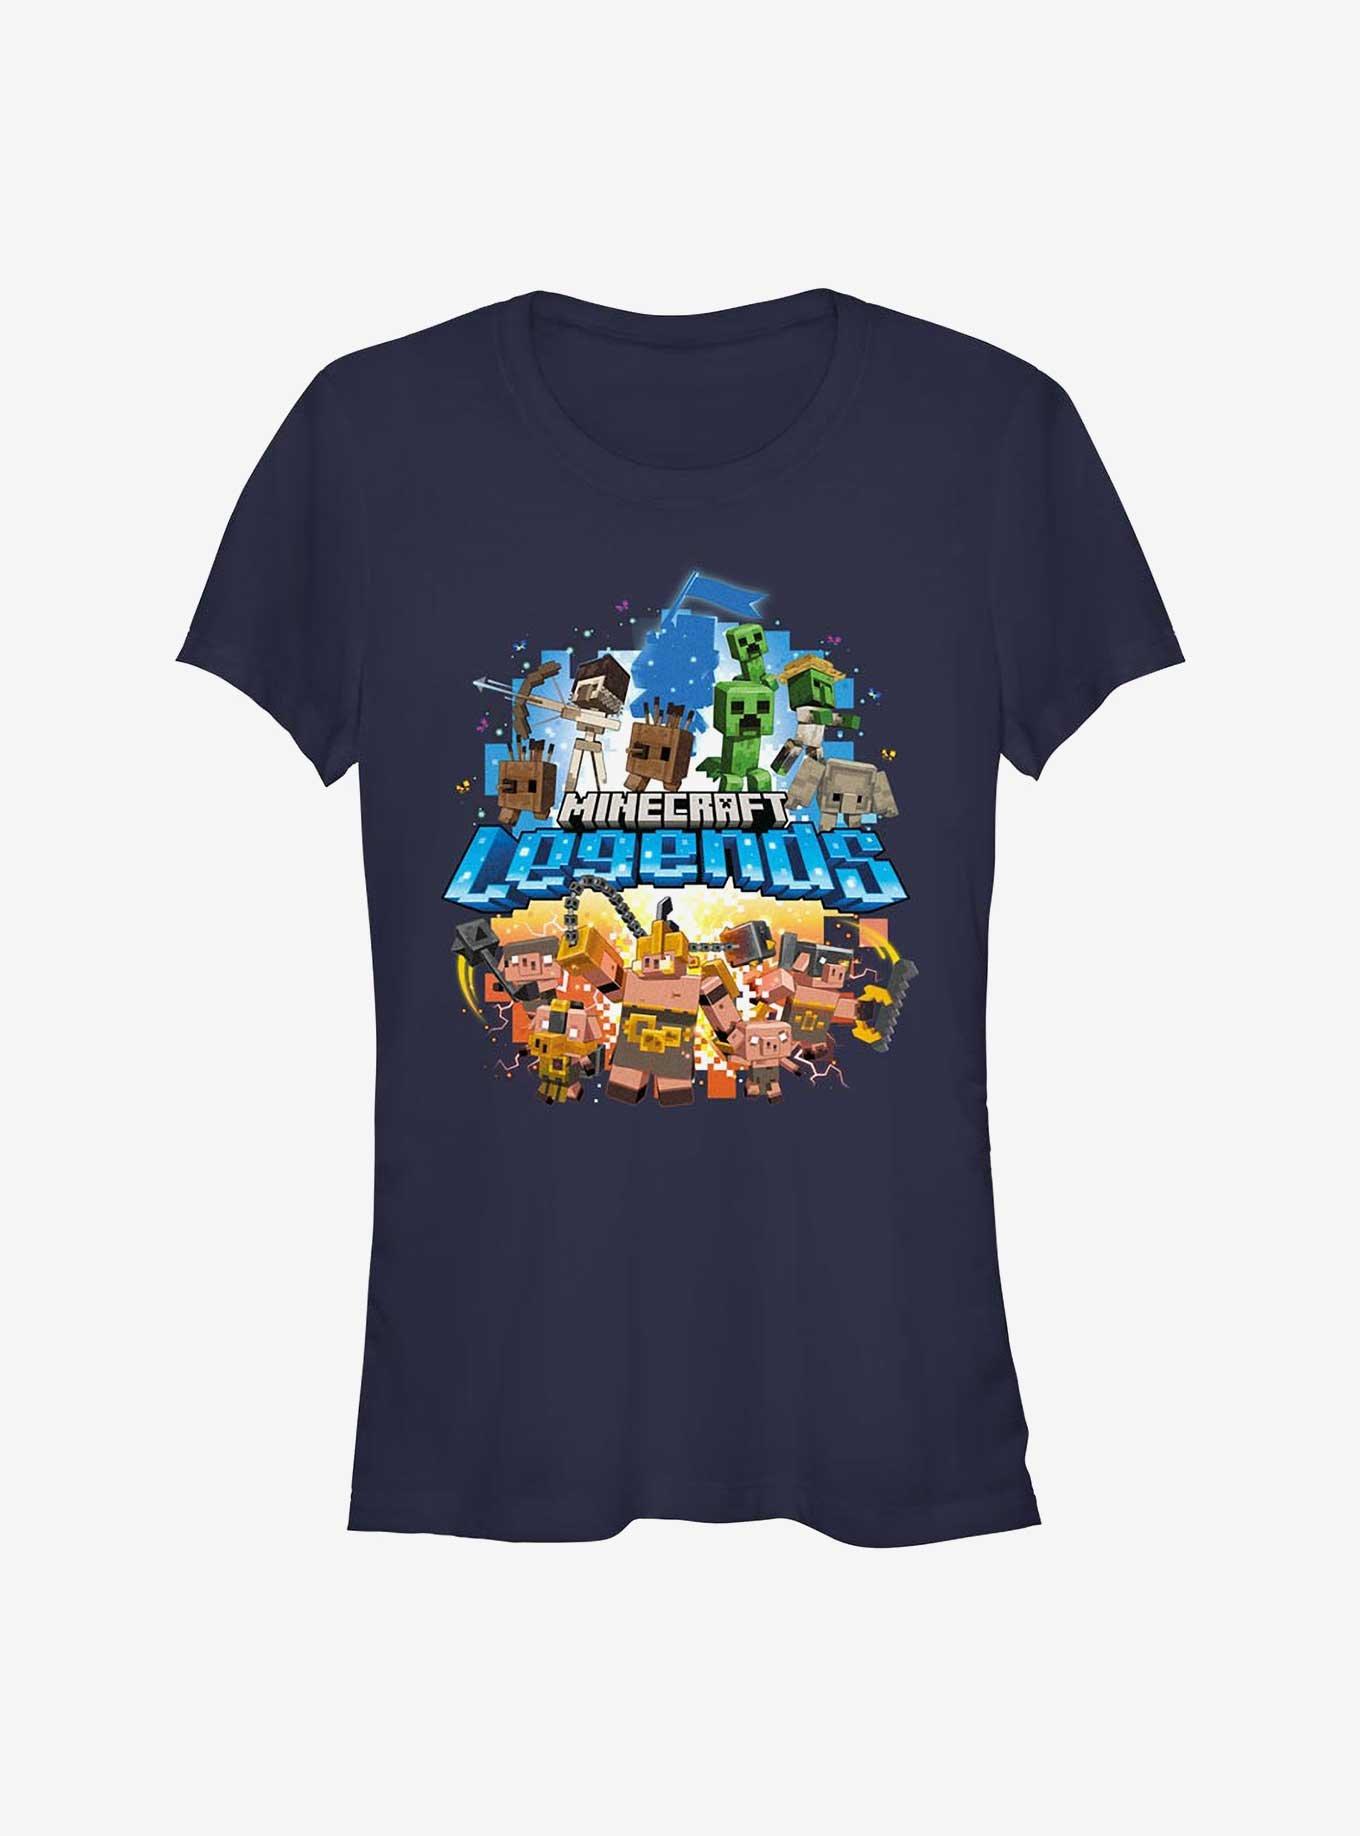 Minecraft Legends Overworld vs. Nether Girls T-Shirt, NAVY, hi-res